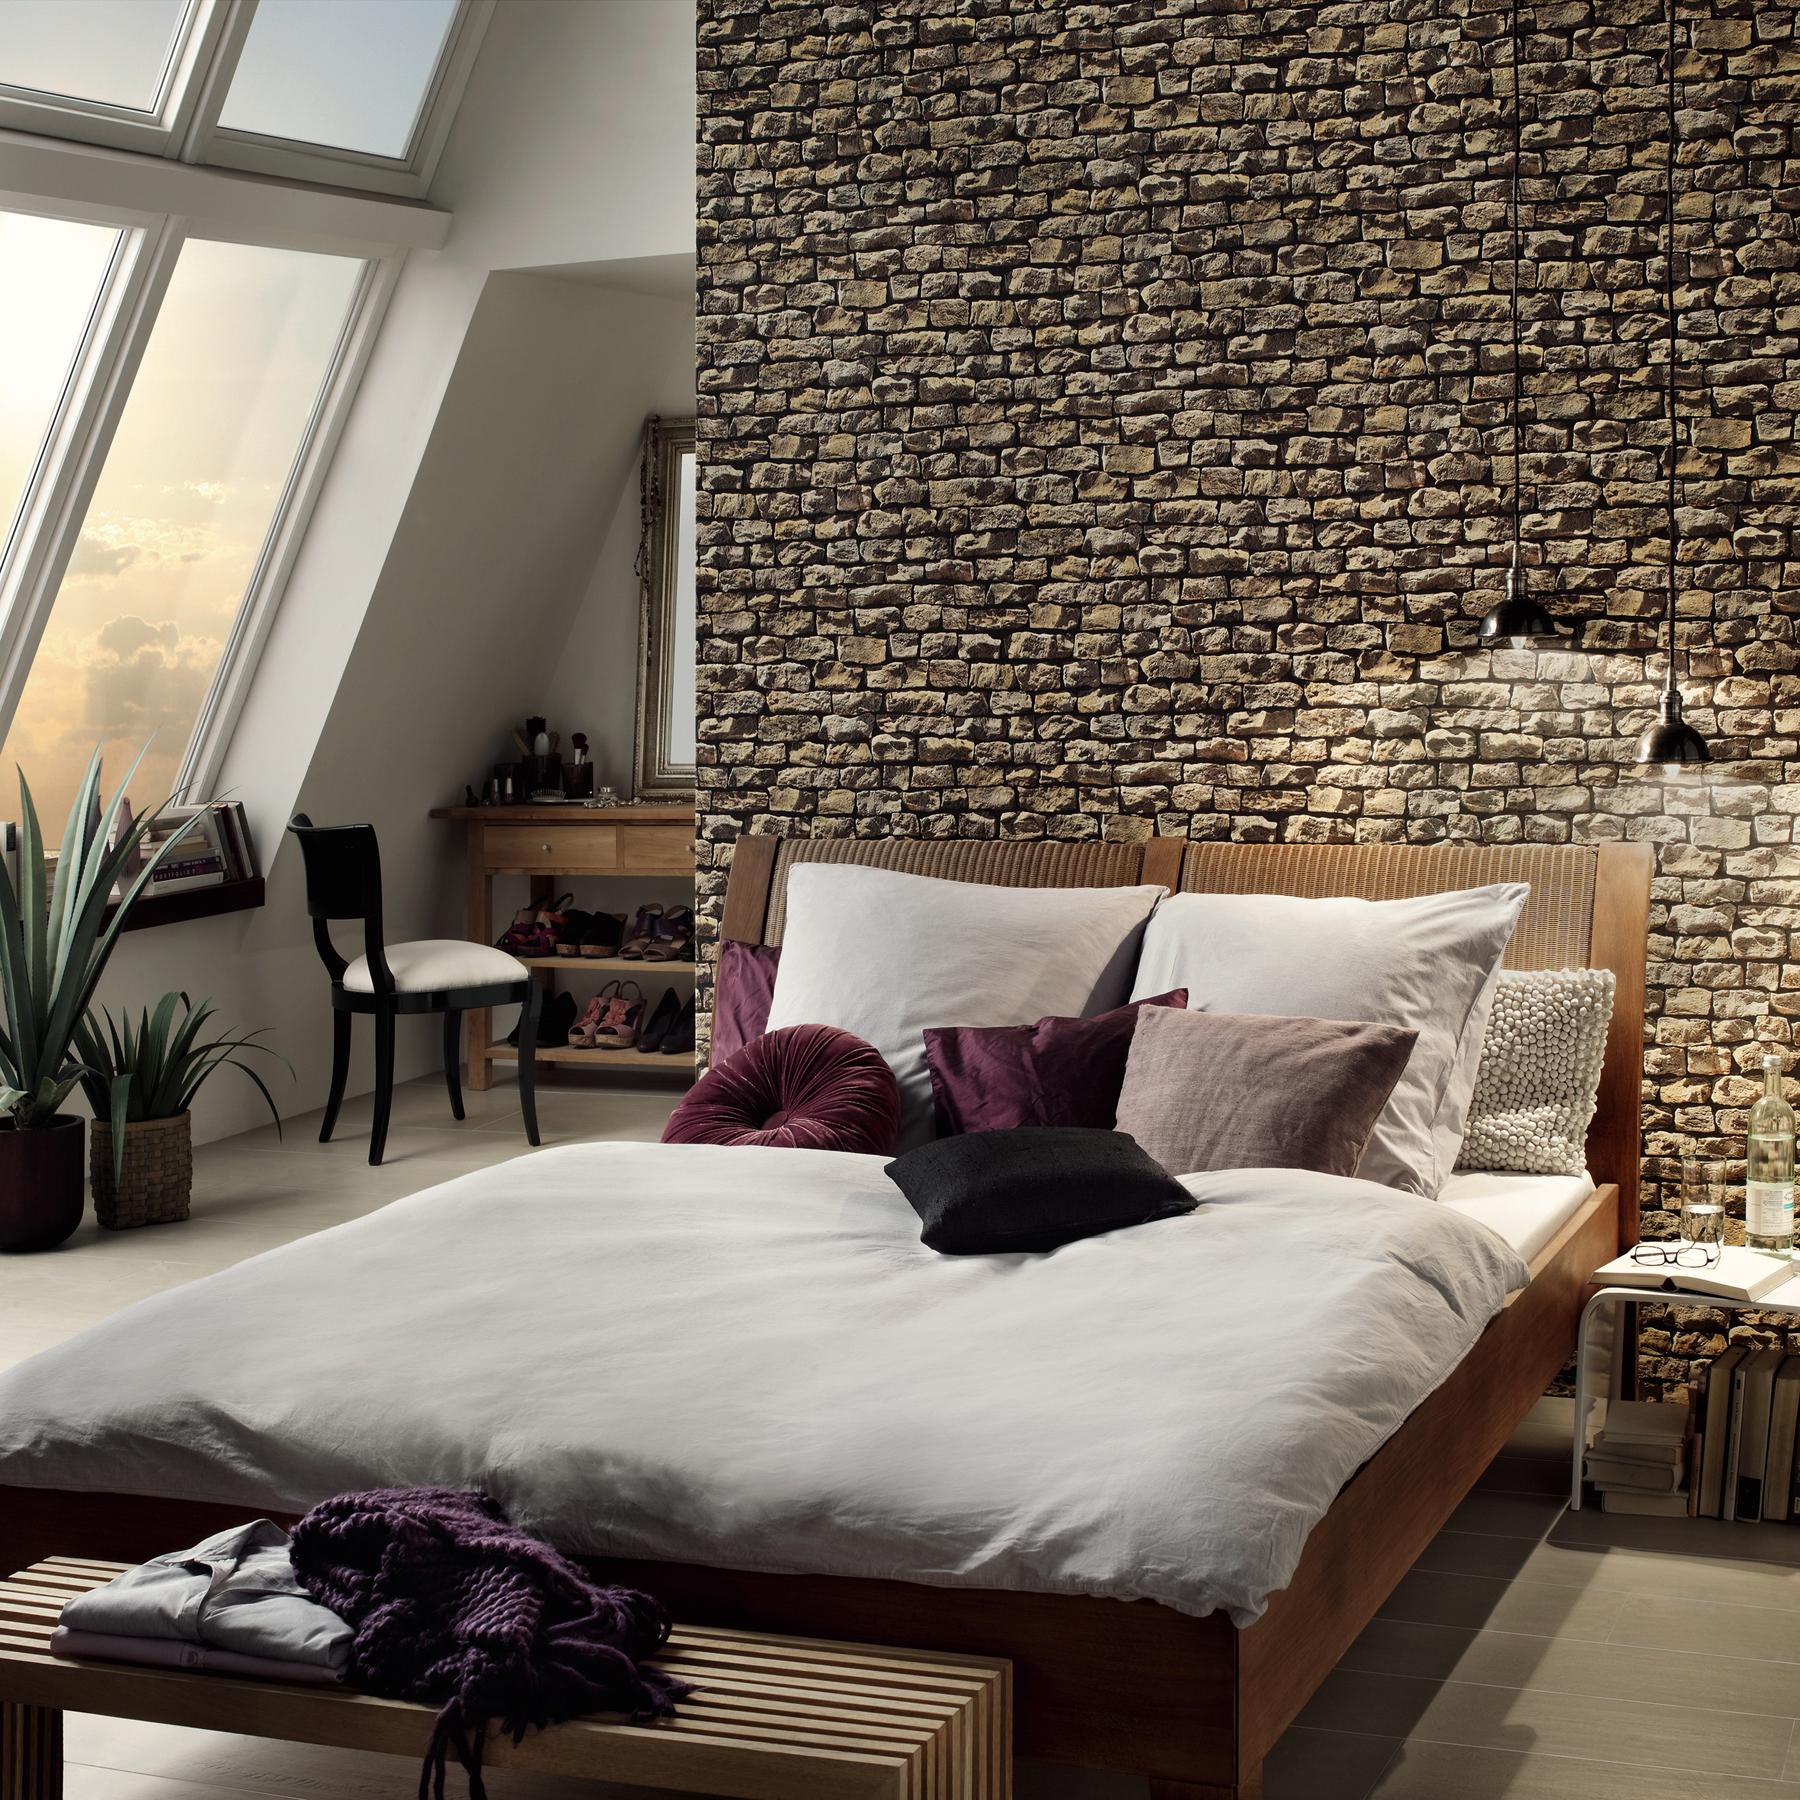 Tapete in Steinwand-Optik #dachfenster #mustertapete #rustikal ©A.S. Création